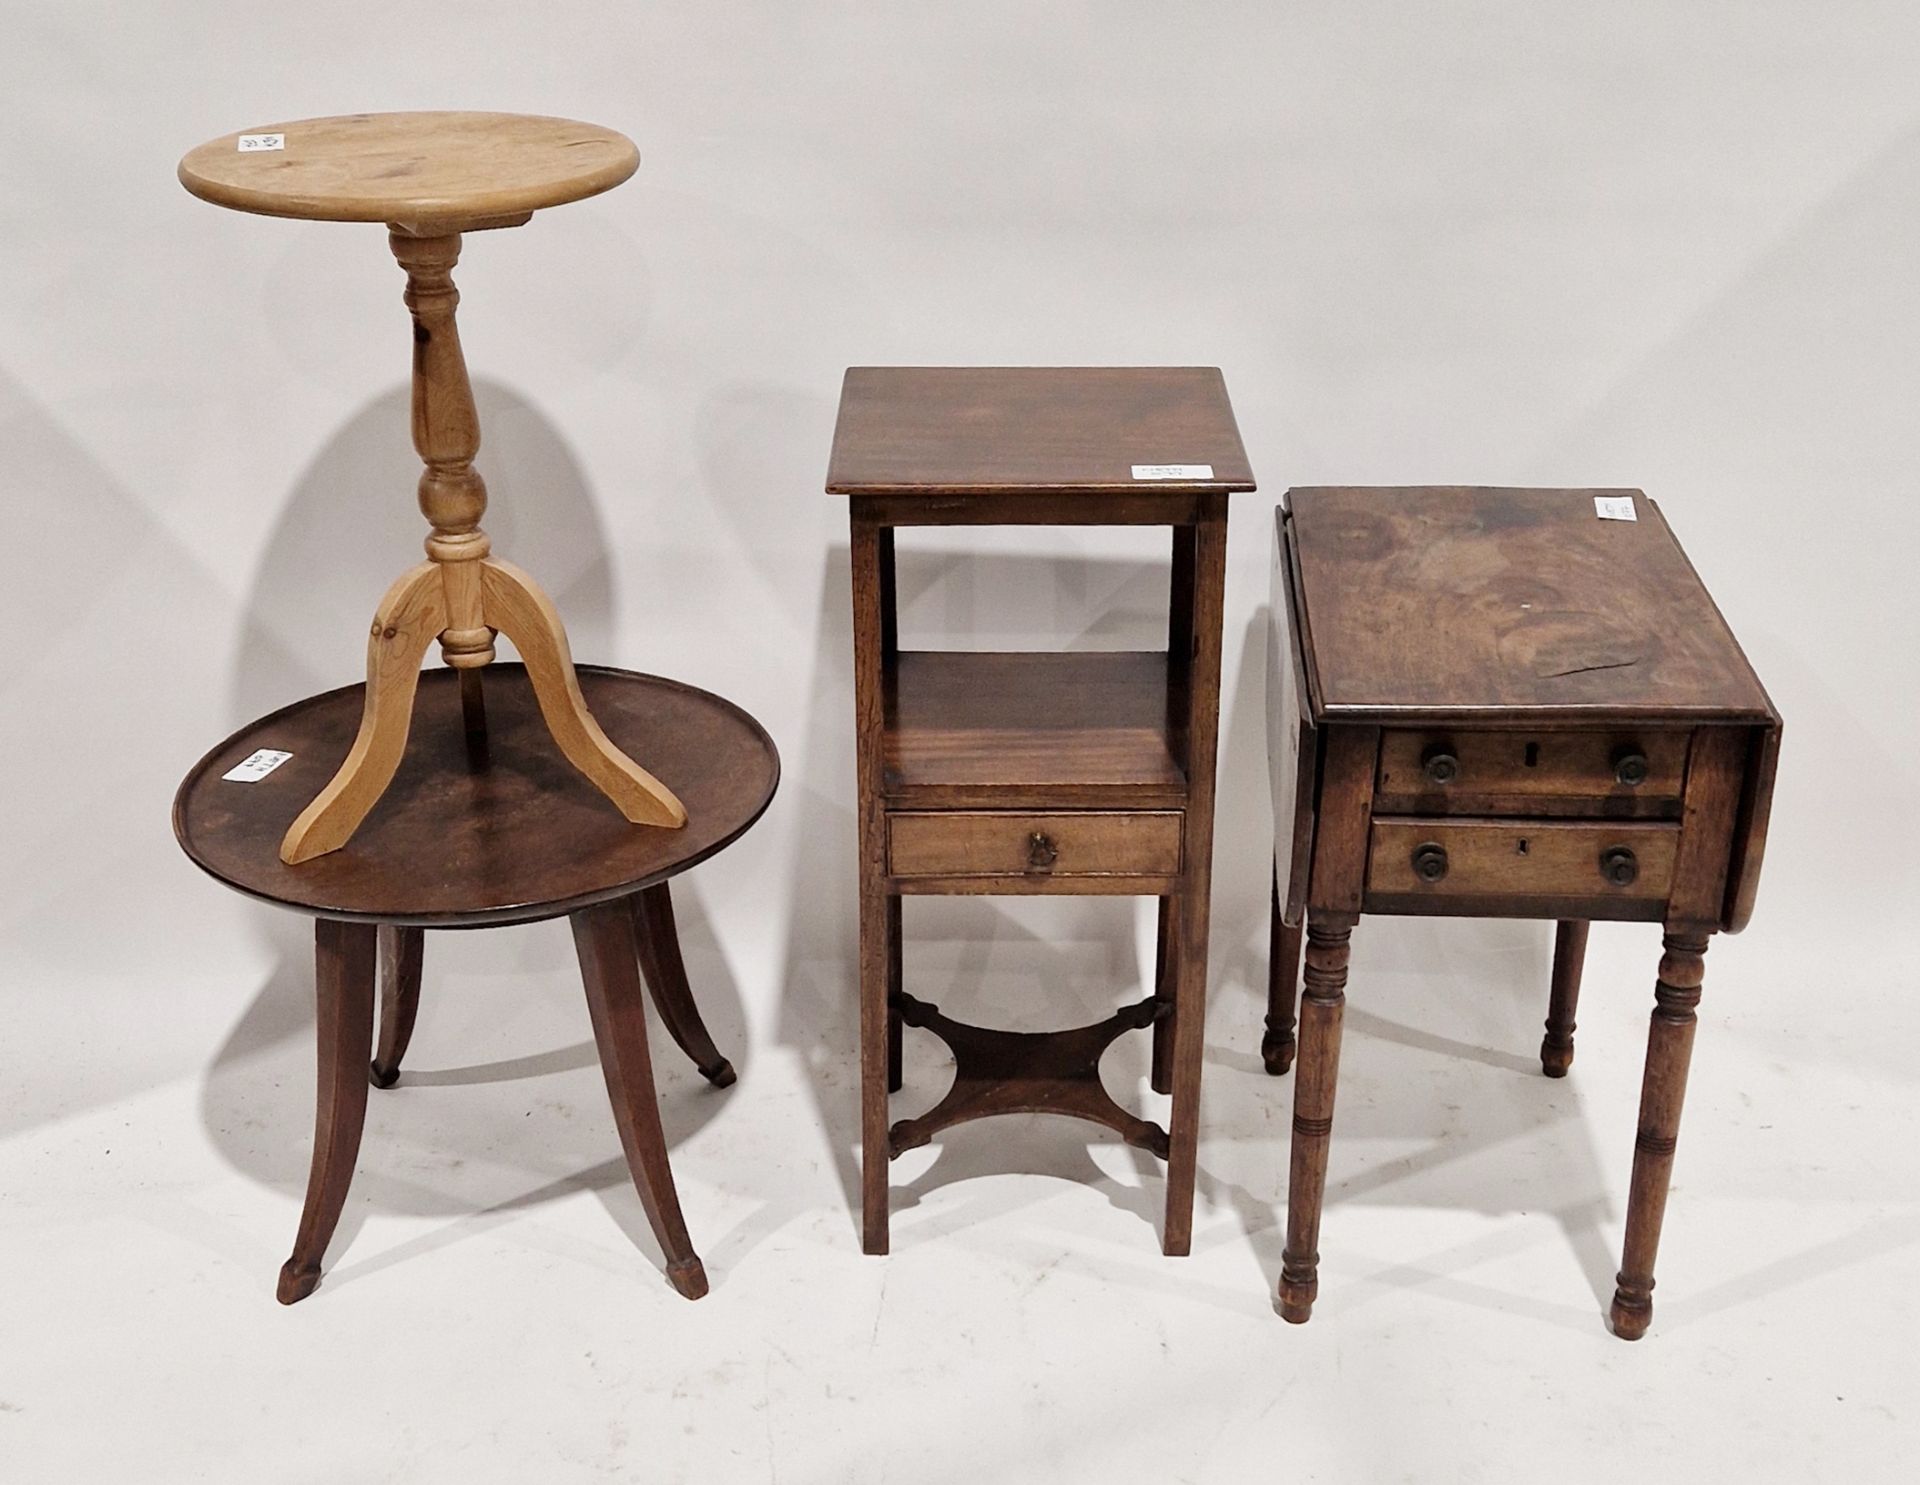 Victorian mahogany pembroke table, 64cm high x 53cm wide x 30cm deep when folded flat, a mahogany